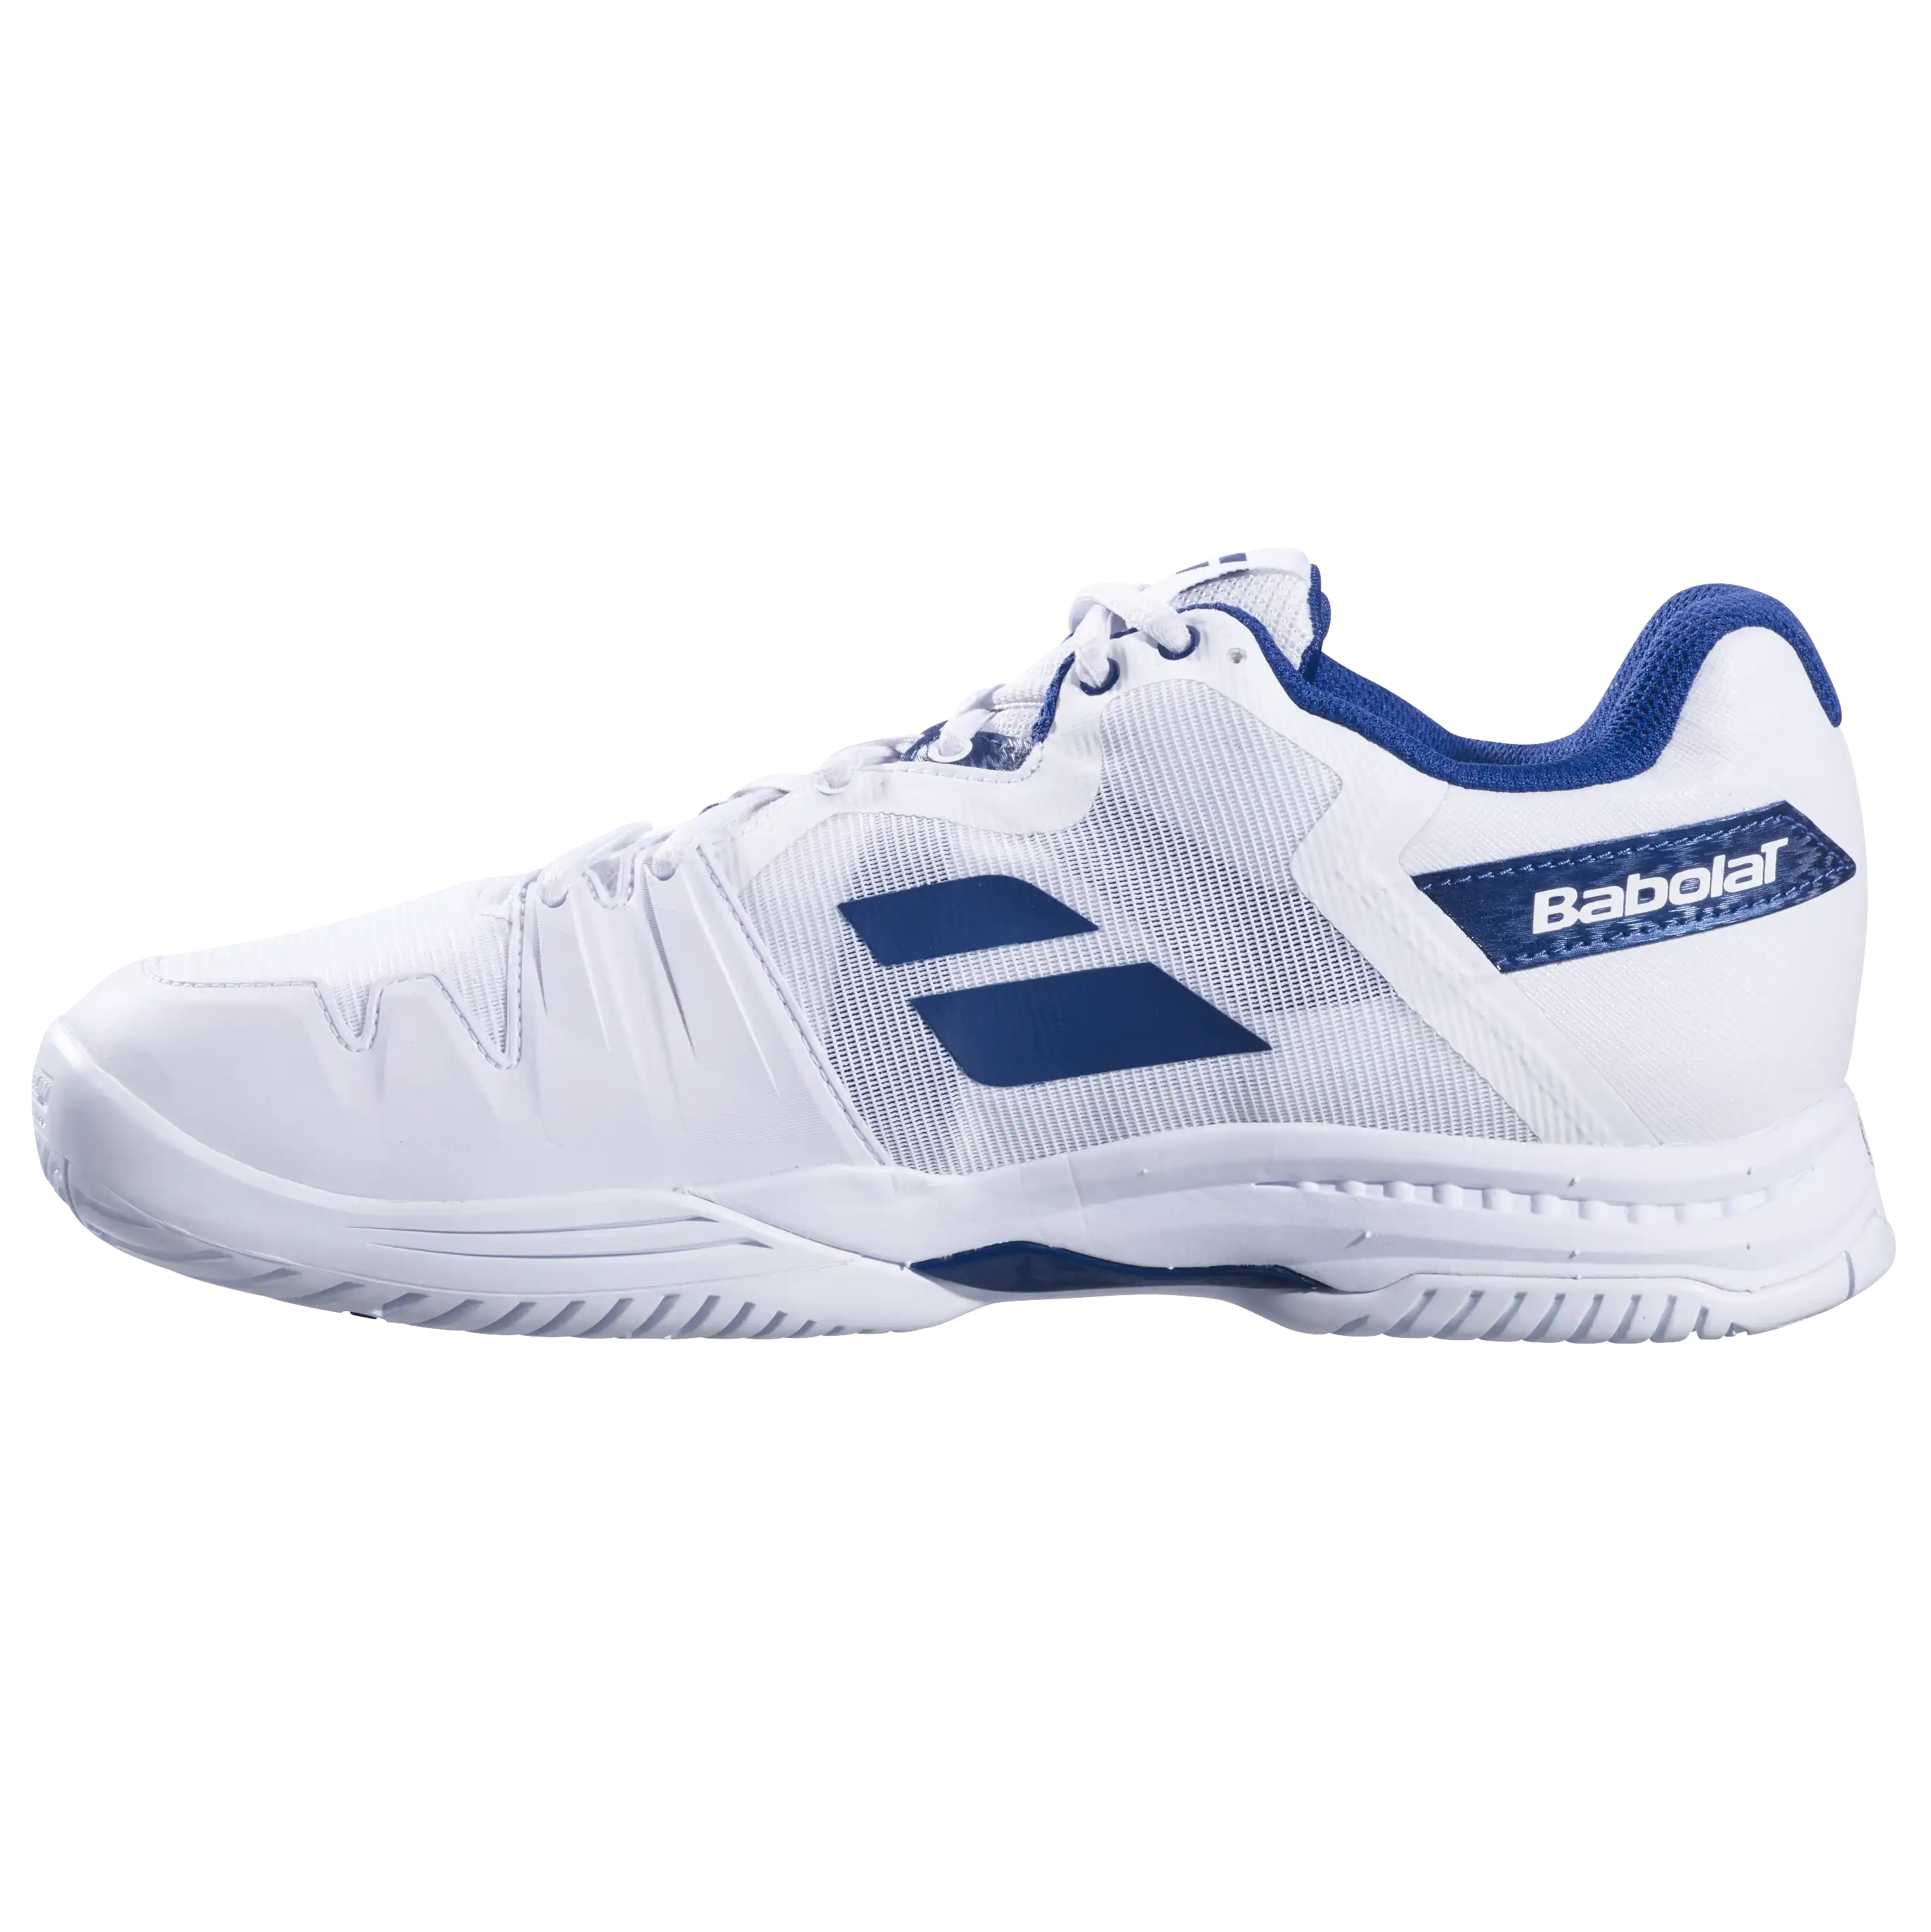 Babolat Men's SFX 3 All Court Tennis Shoe In White/Navy